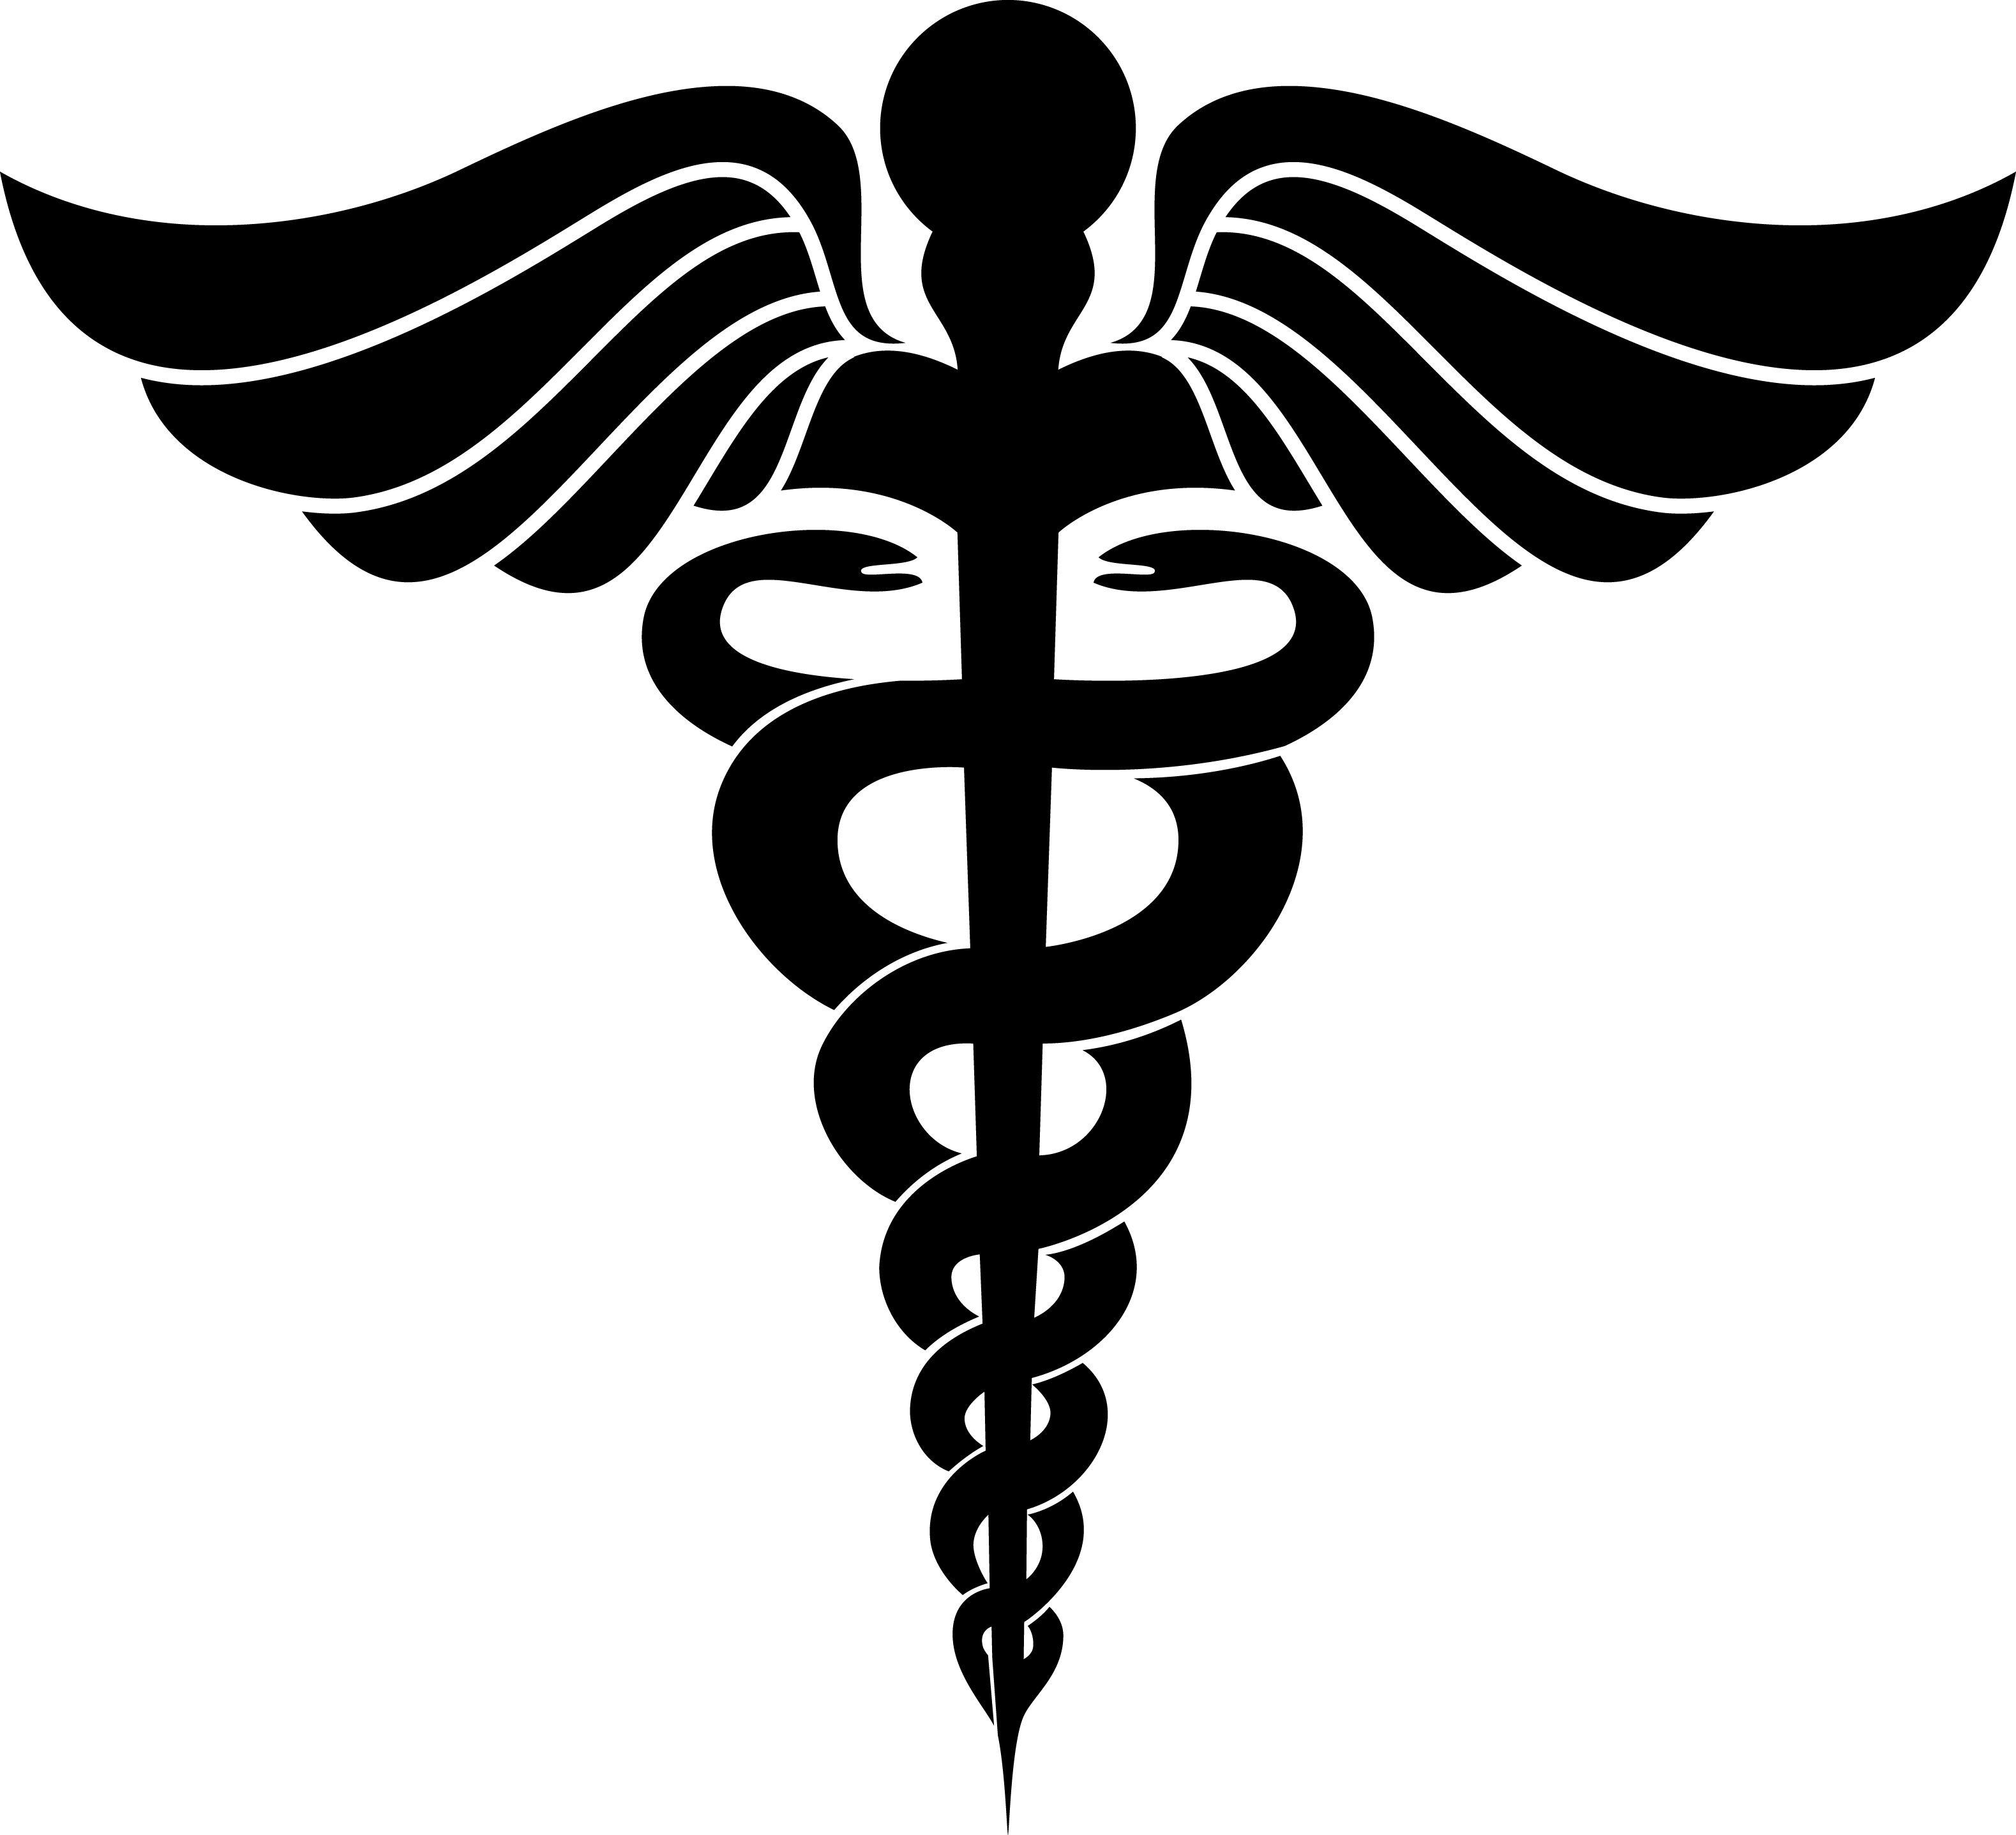 Black and White Medical Logo - Free Medical Symbol Cliparts, Download Free Clip Art, Free Clip Art ...